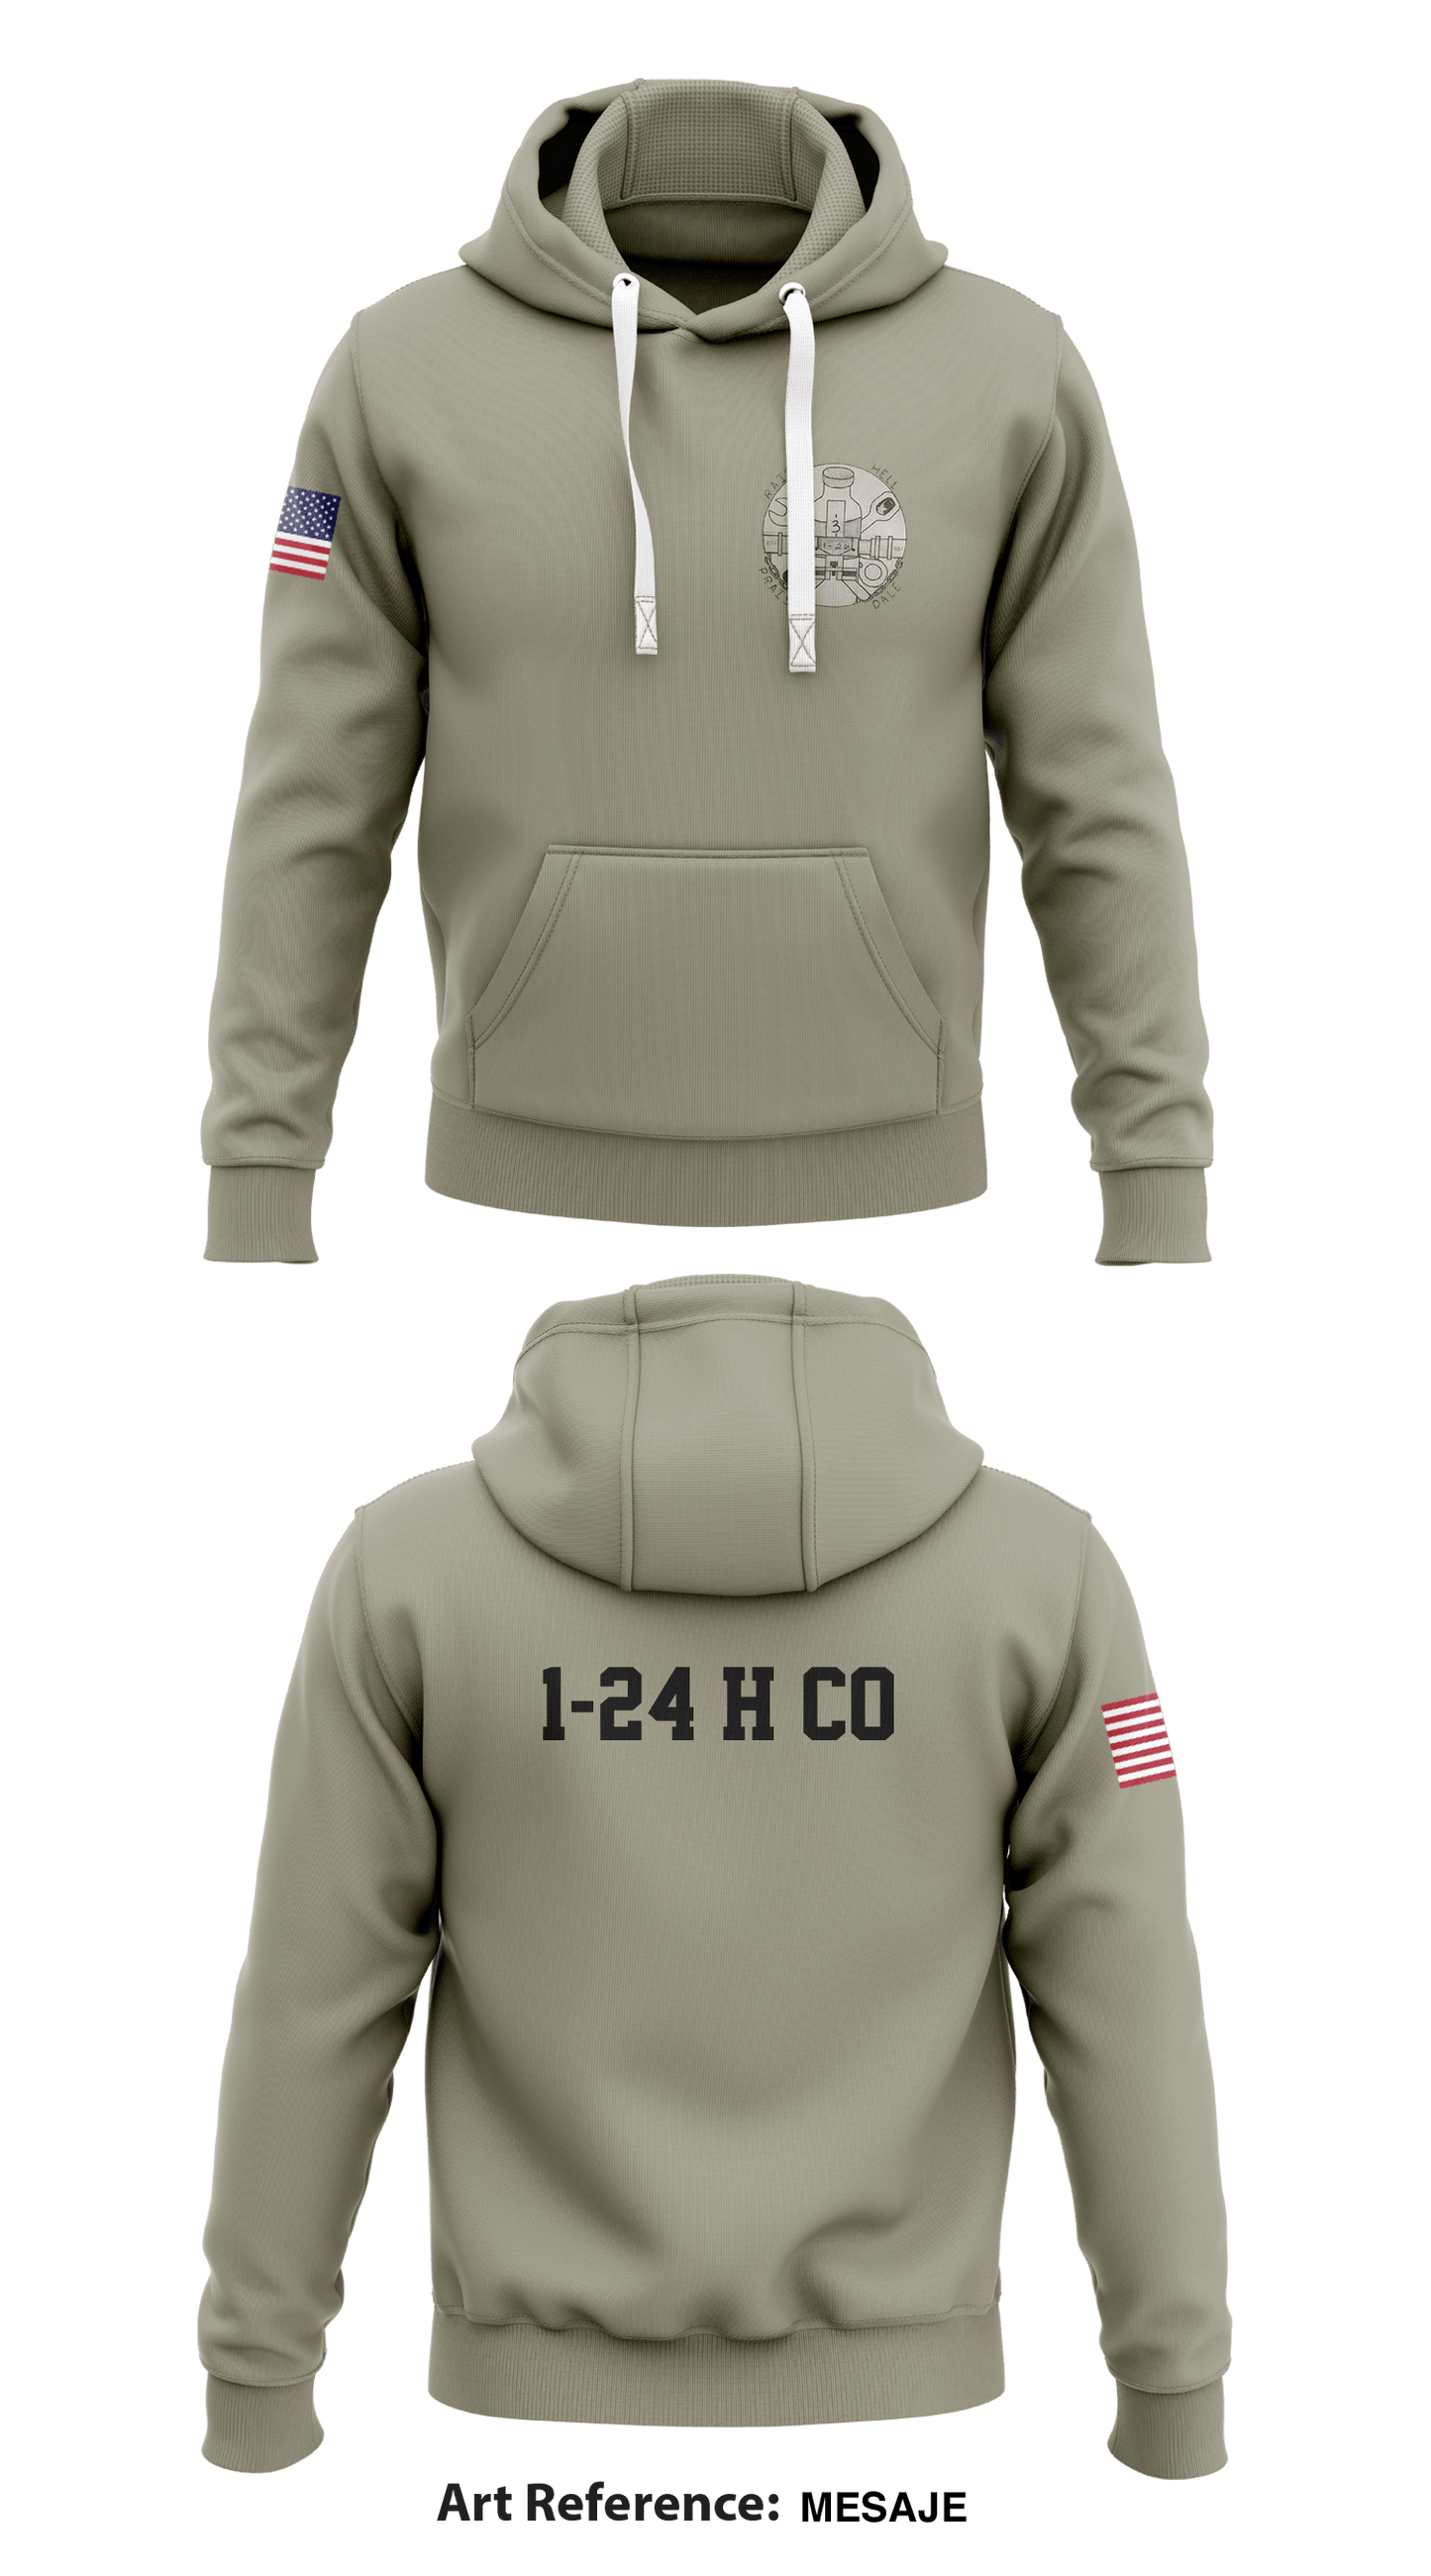 1-24 H CO Store 1 Core Men's Hooded Performance Sweatshirt - mESAJe